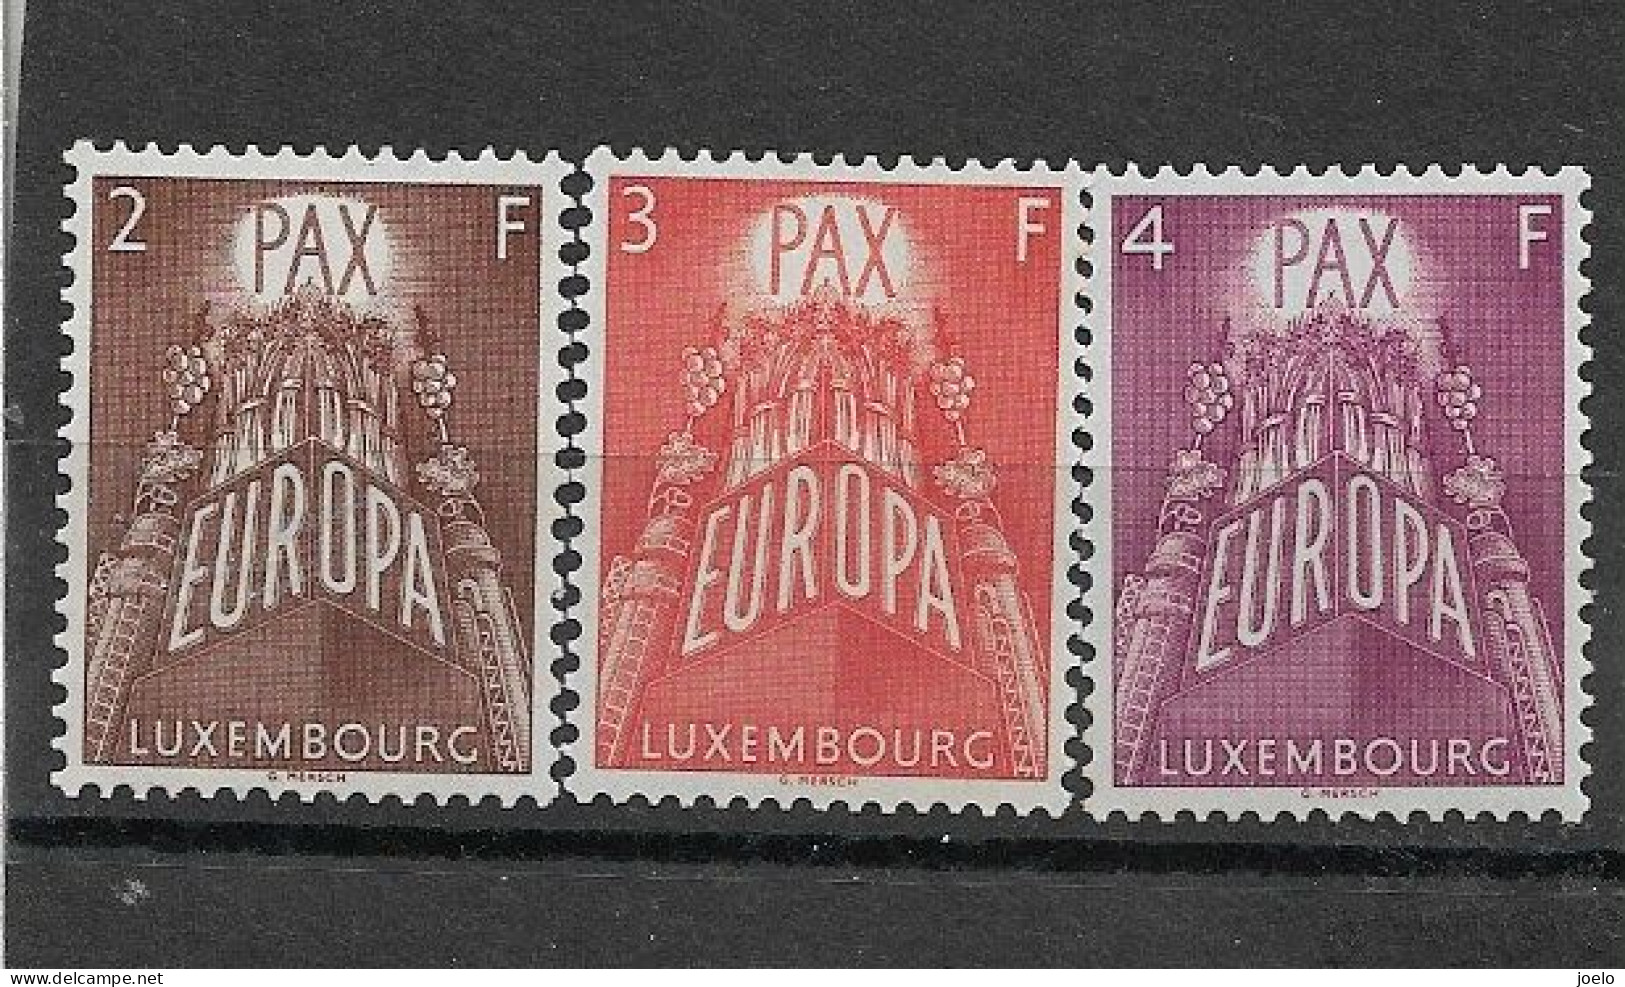 LUXEMBOURG 1957 EUROPA MH SET - Machin-Ausgaben